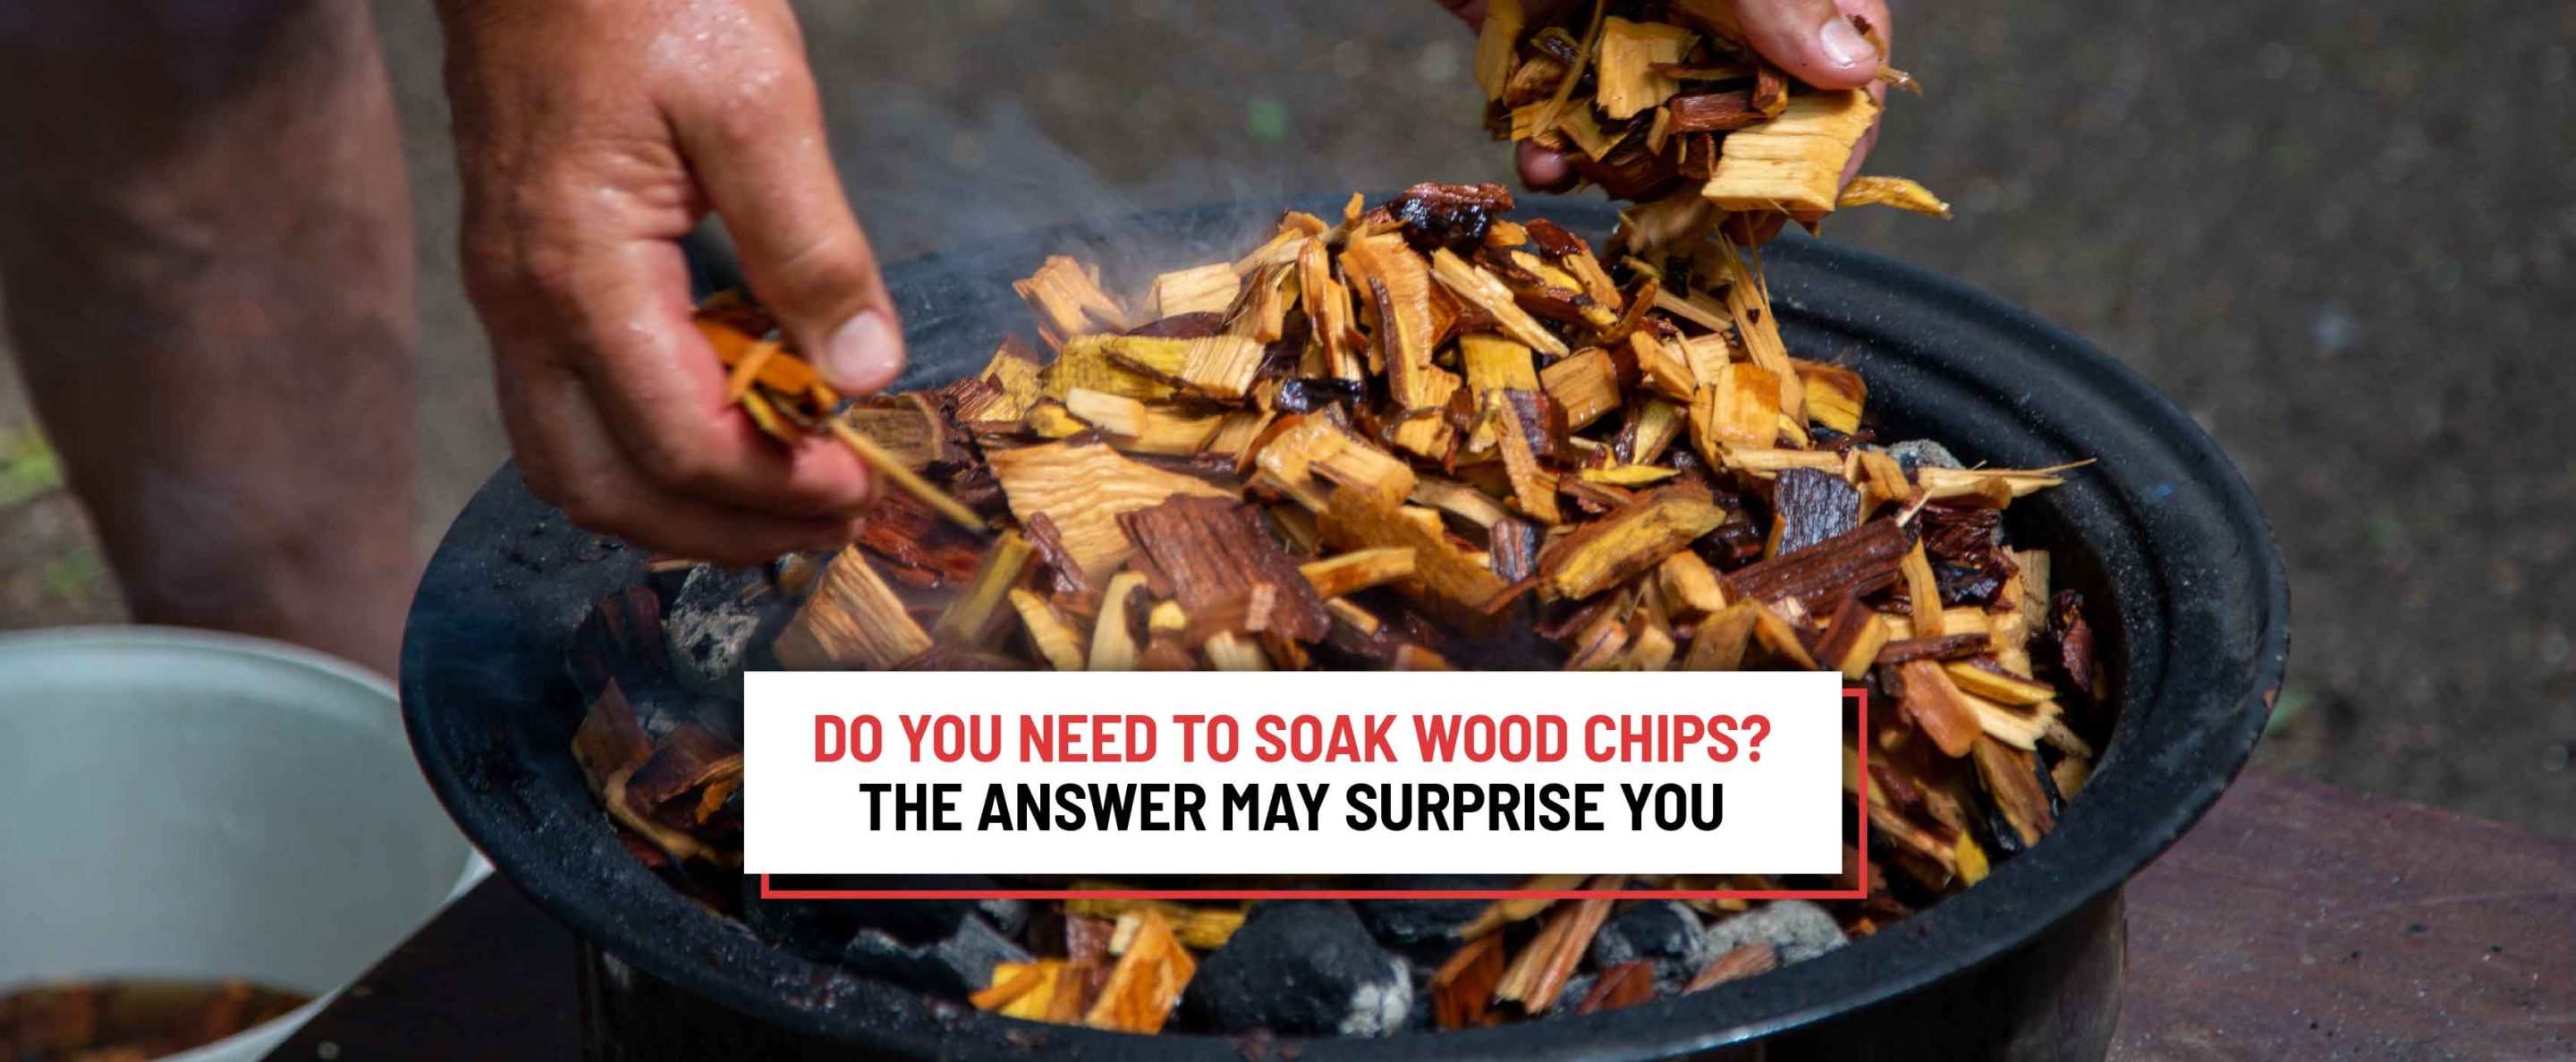 soak wood chips